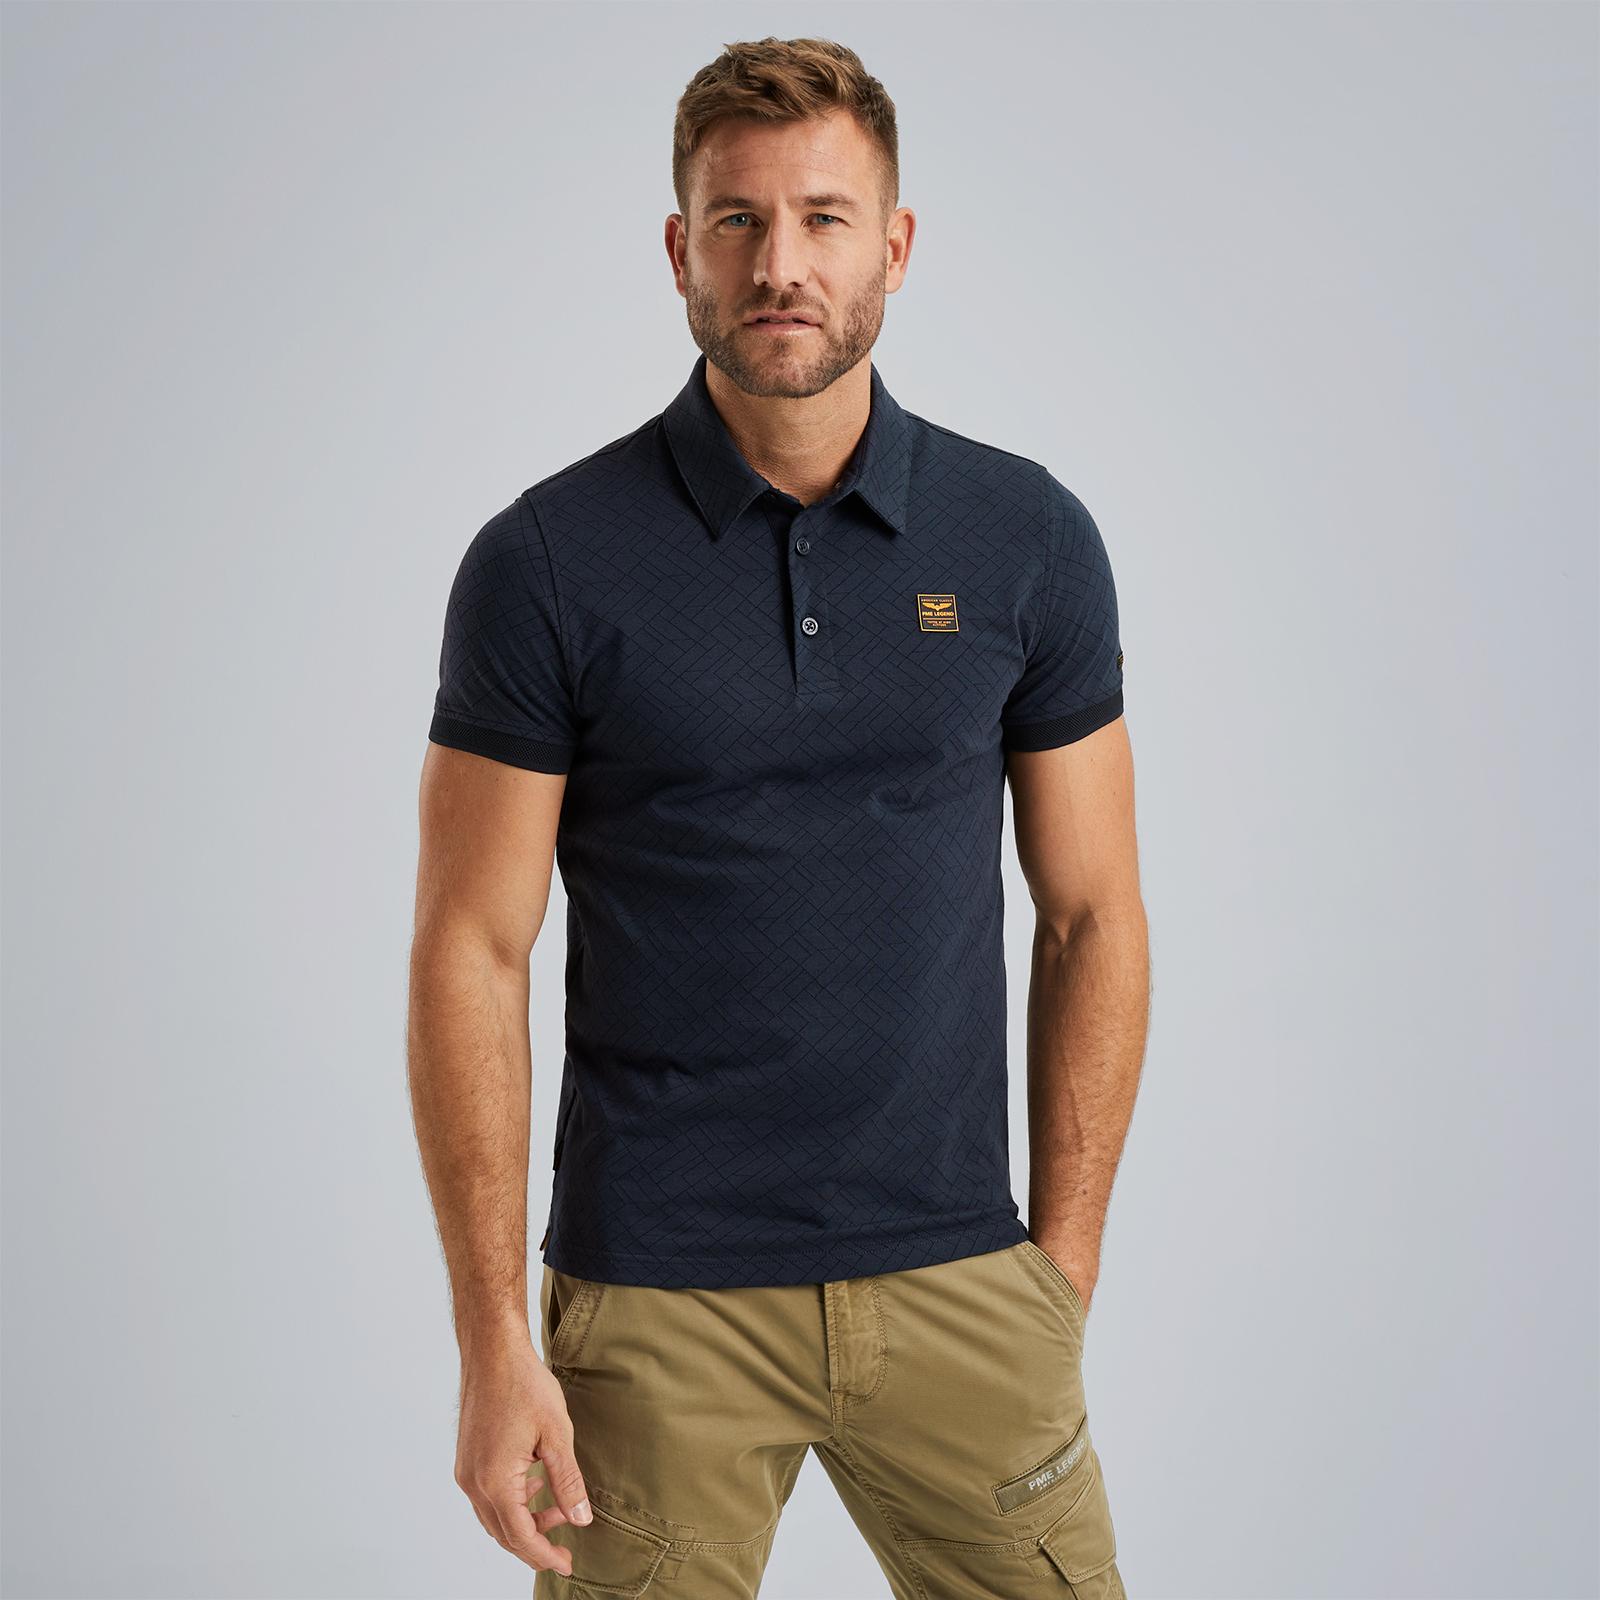 PME LEGEND Heren Polo's & T-shirts Short Sleeve Polo Jacquard Jersey Blauw